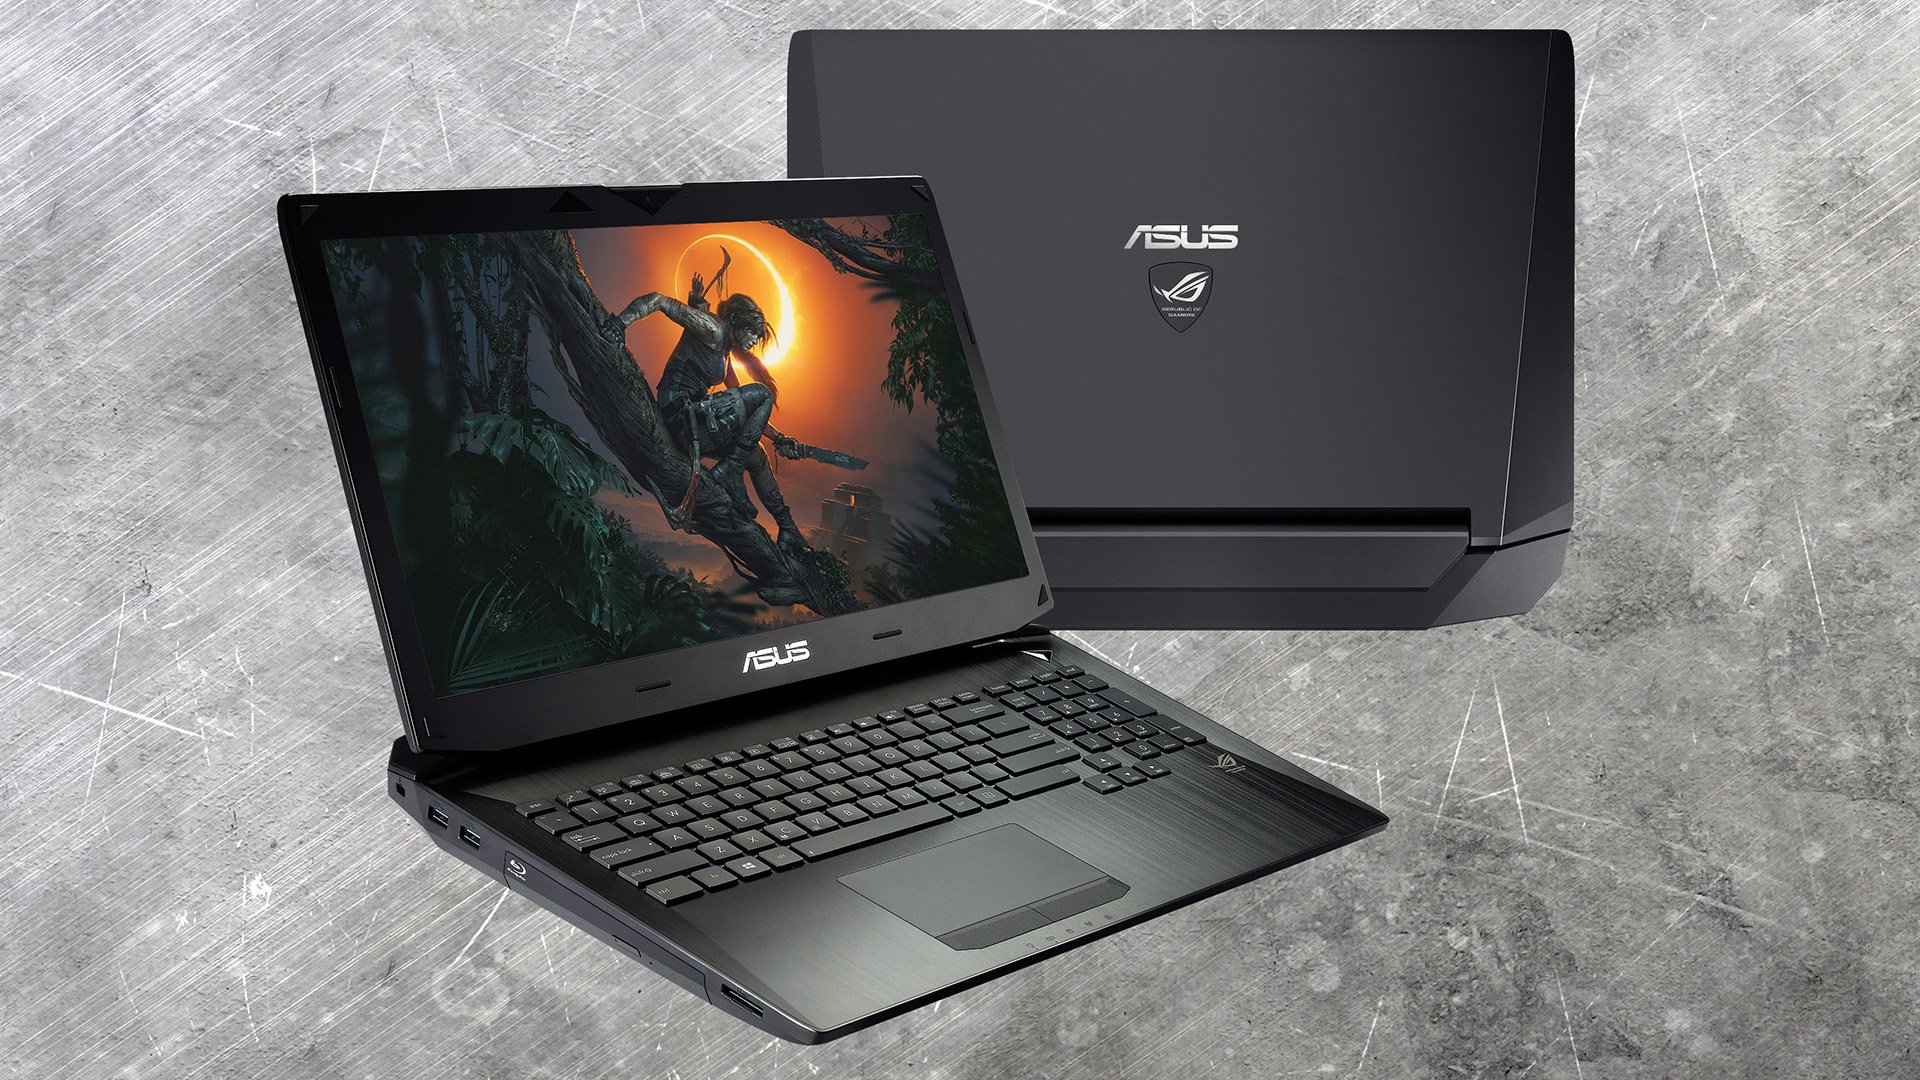 Shadow of the Tomb Raider. FPS тест на старом ноутбуке Asus g750js (gtx870m)